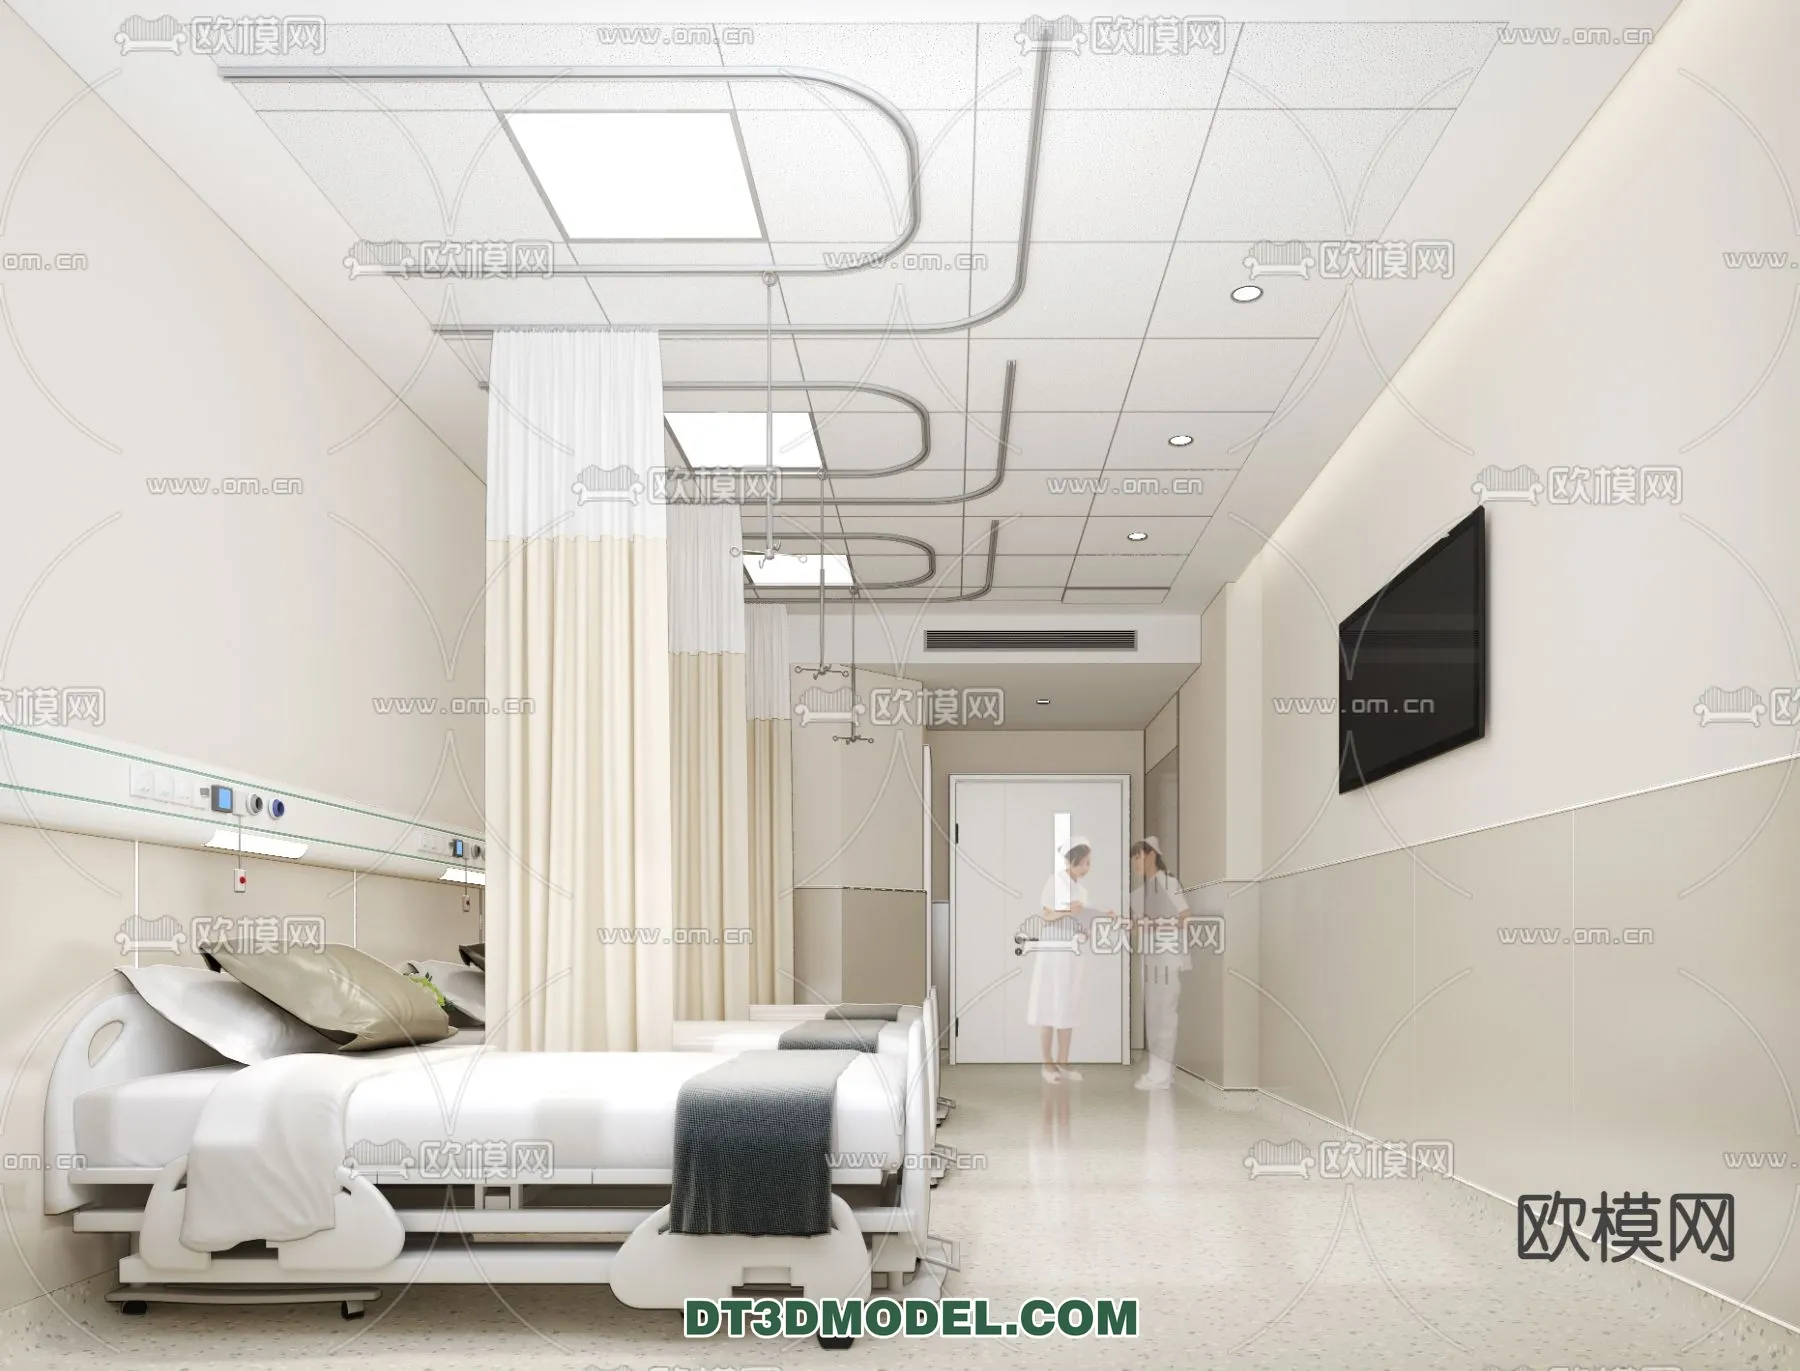 HOSPITAL 3D SCENES – MODERN – 0127